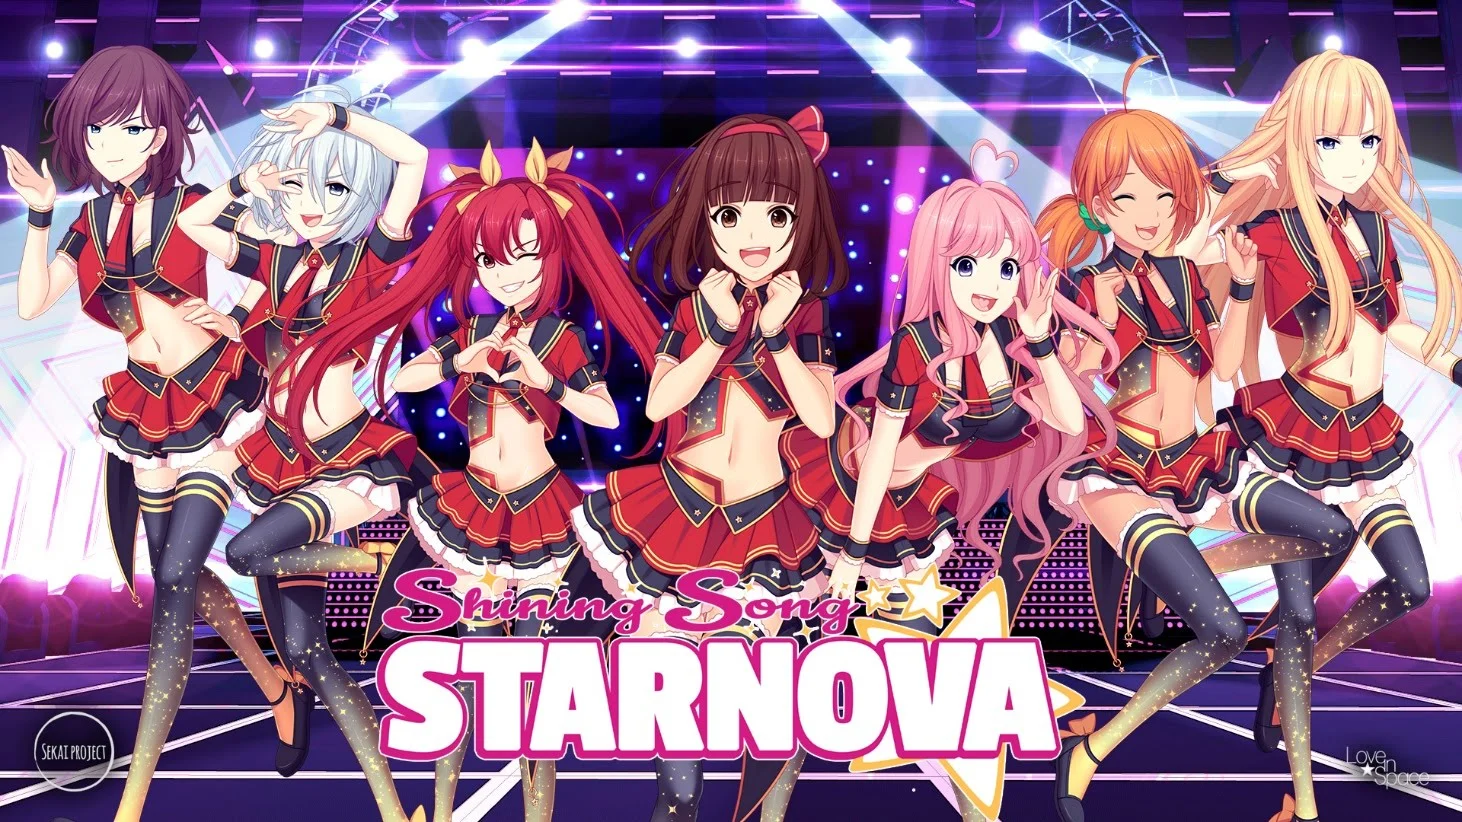 Shining Song Starnova main image